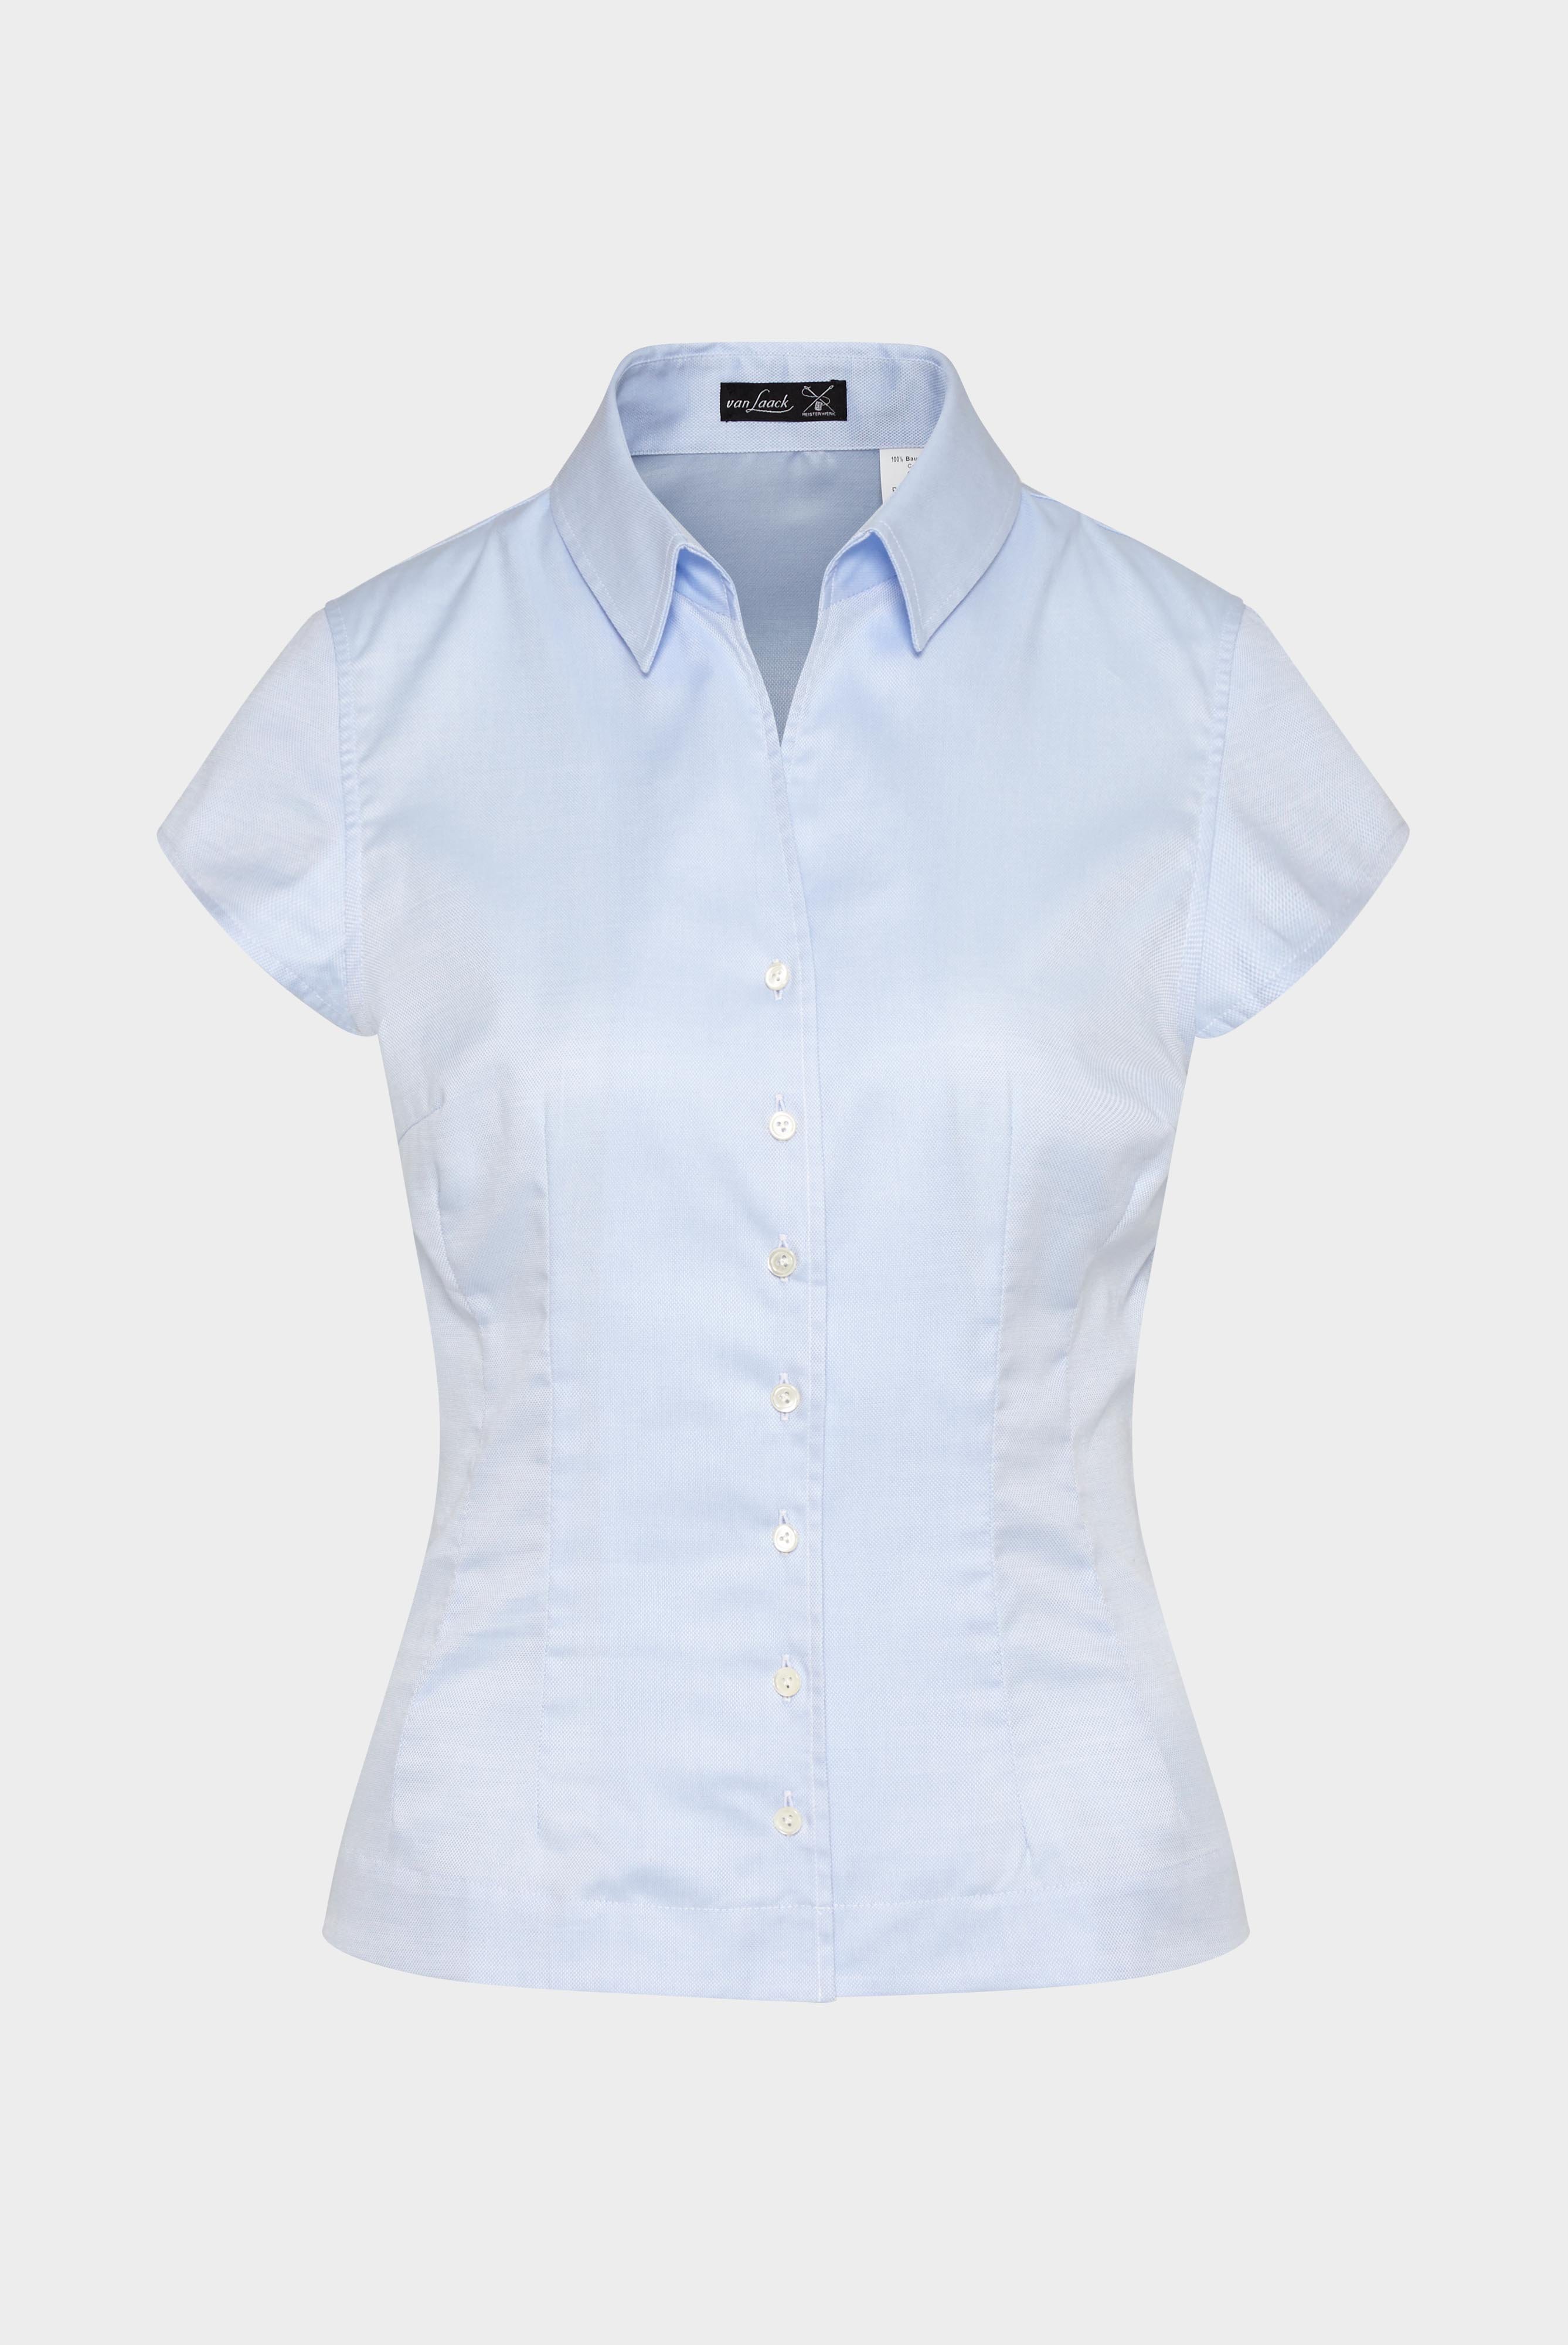 Business Blouses+Natté Short Sleeve Shirt Blouse+05.5029.73.130532.720.48